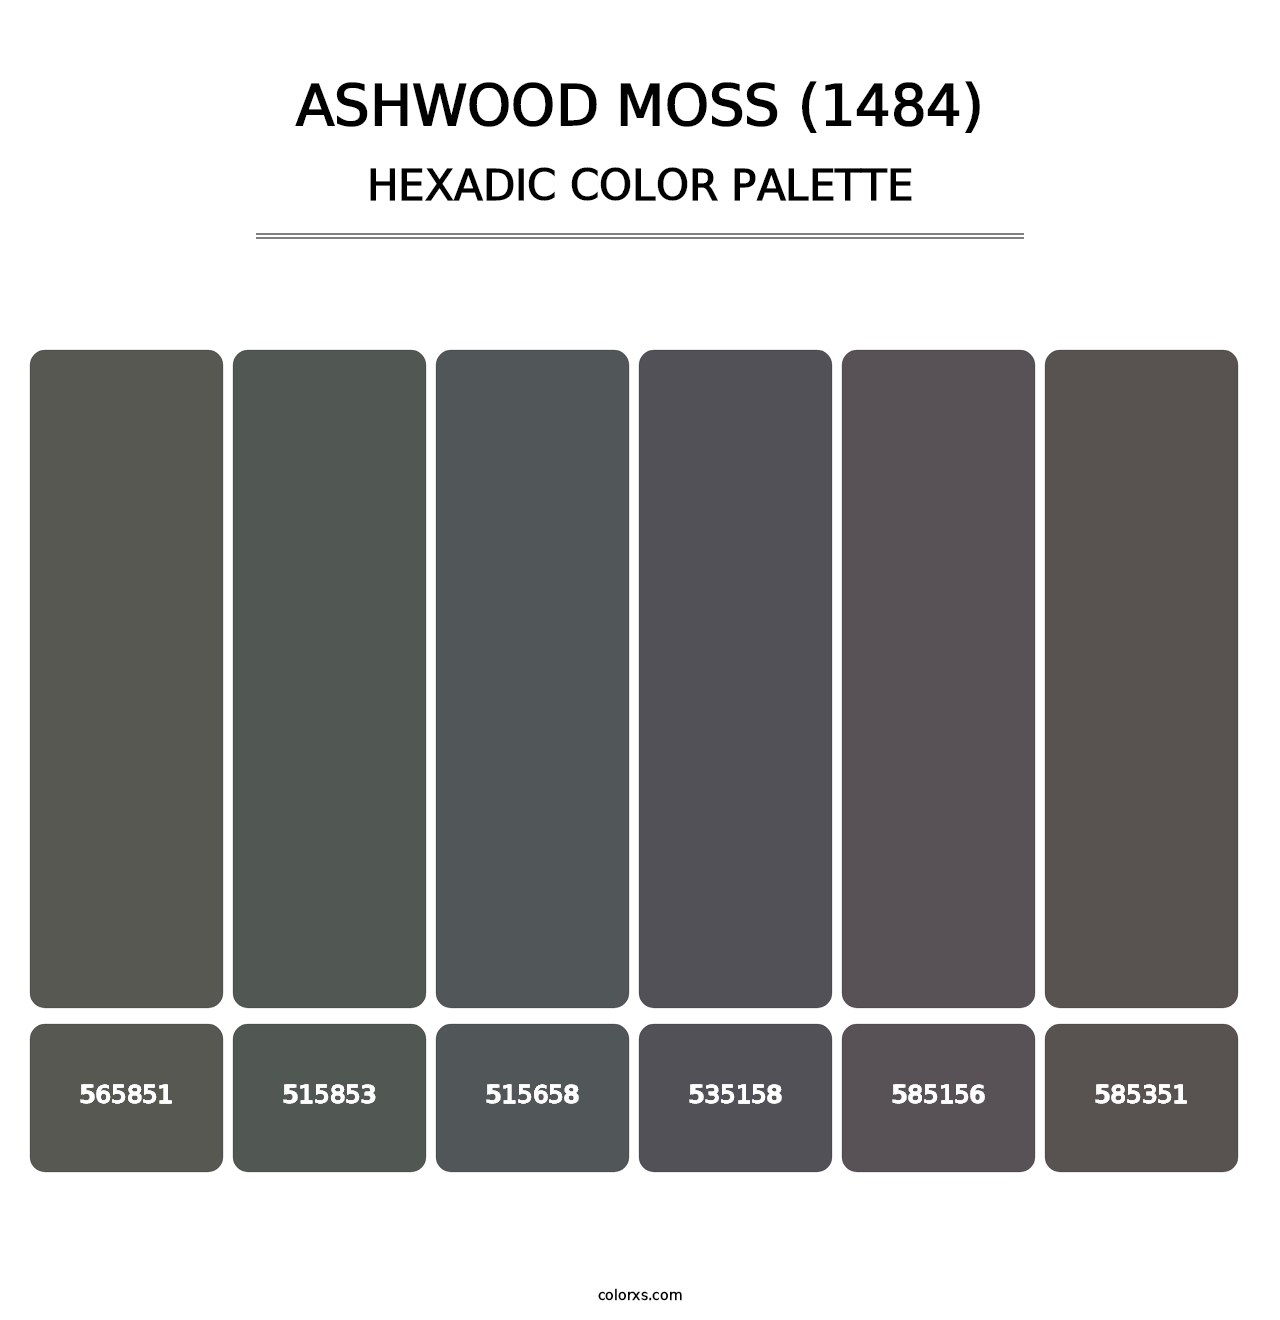 Ashwood Moss (1484) - Hexadic Color Palette